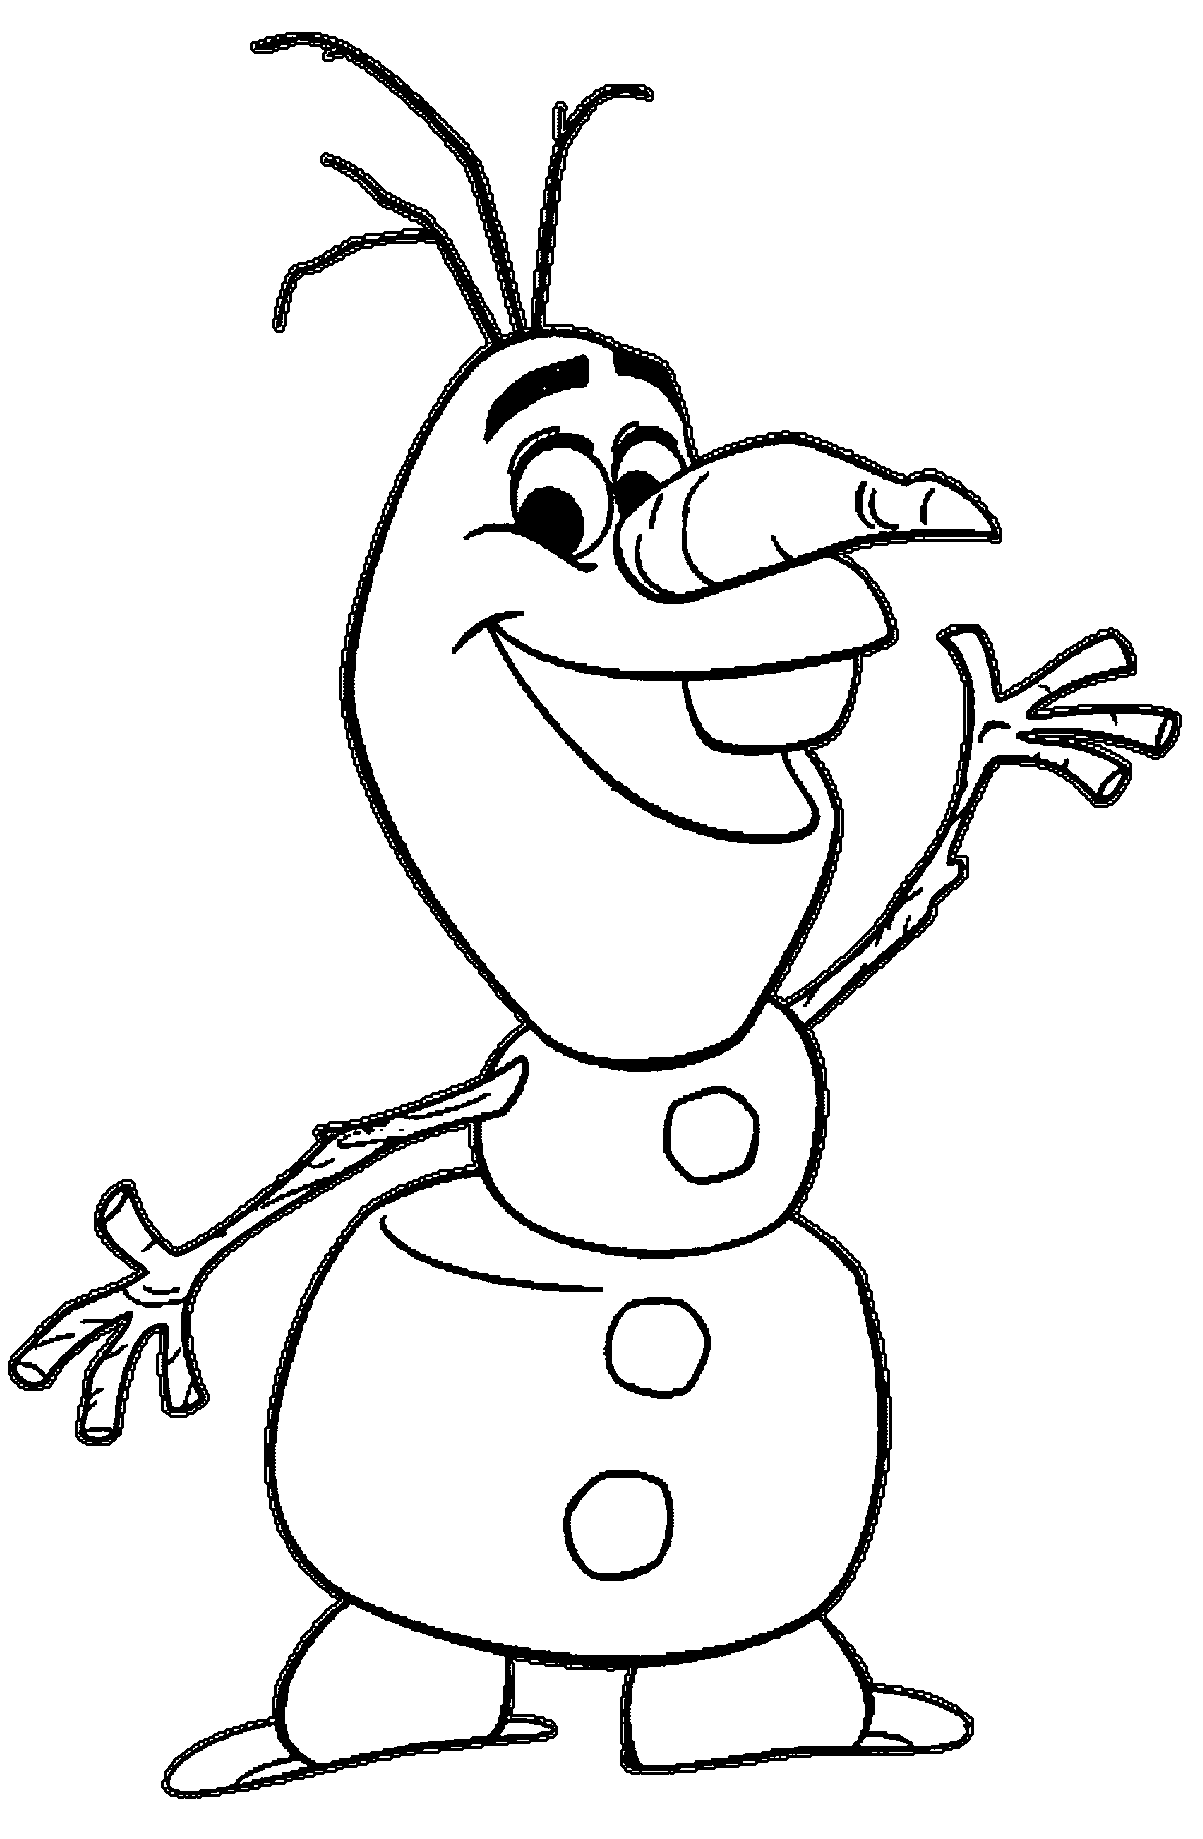 Disney Olaf Drawing at GetDrawings | Free download